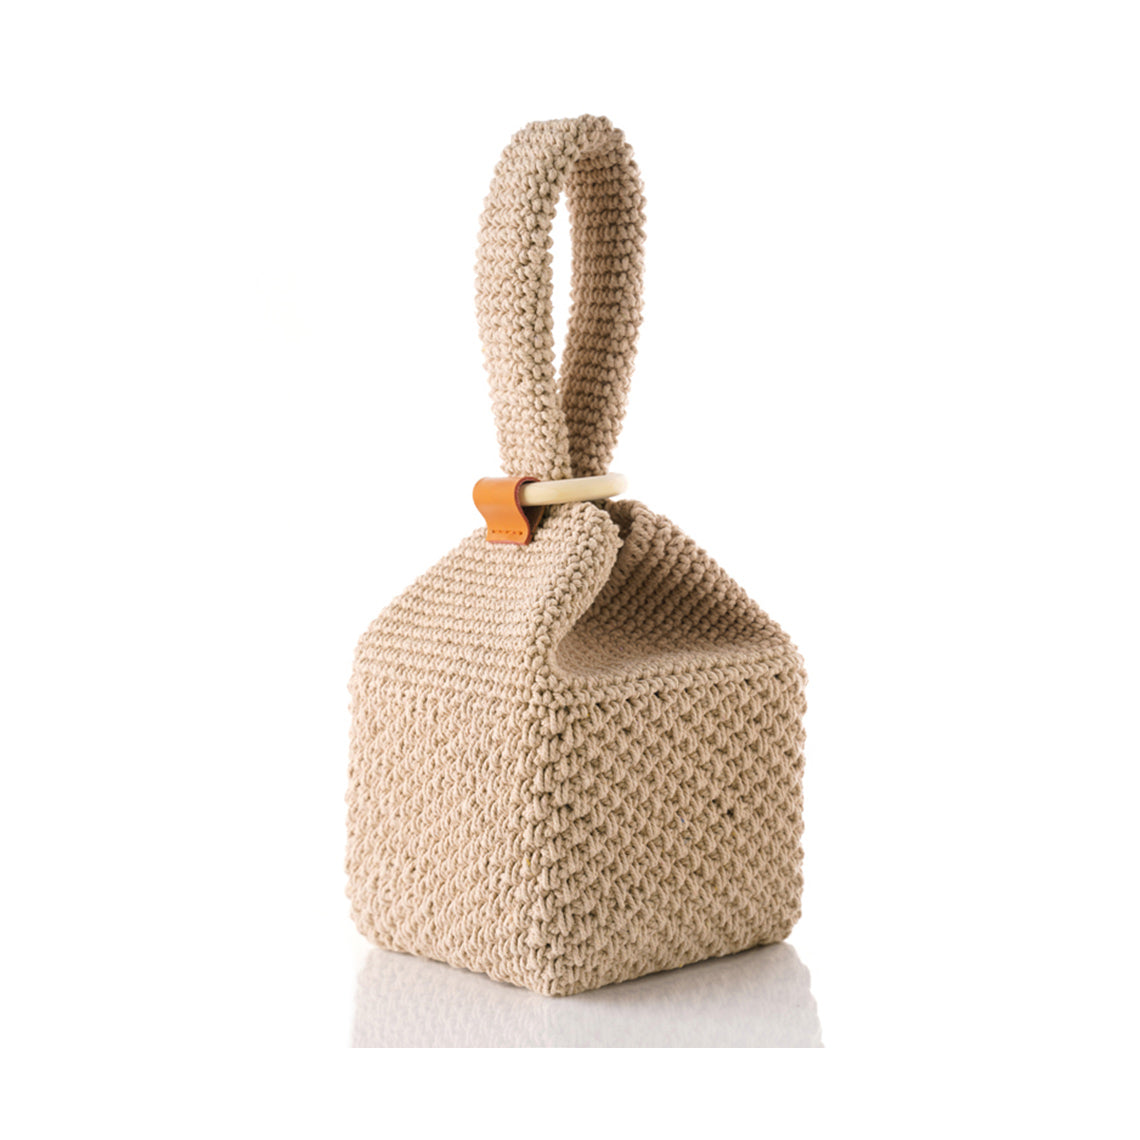 Crochet Milk Box Bag DIY Kit